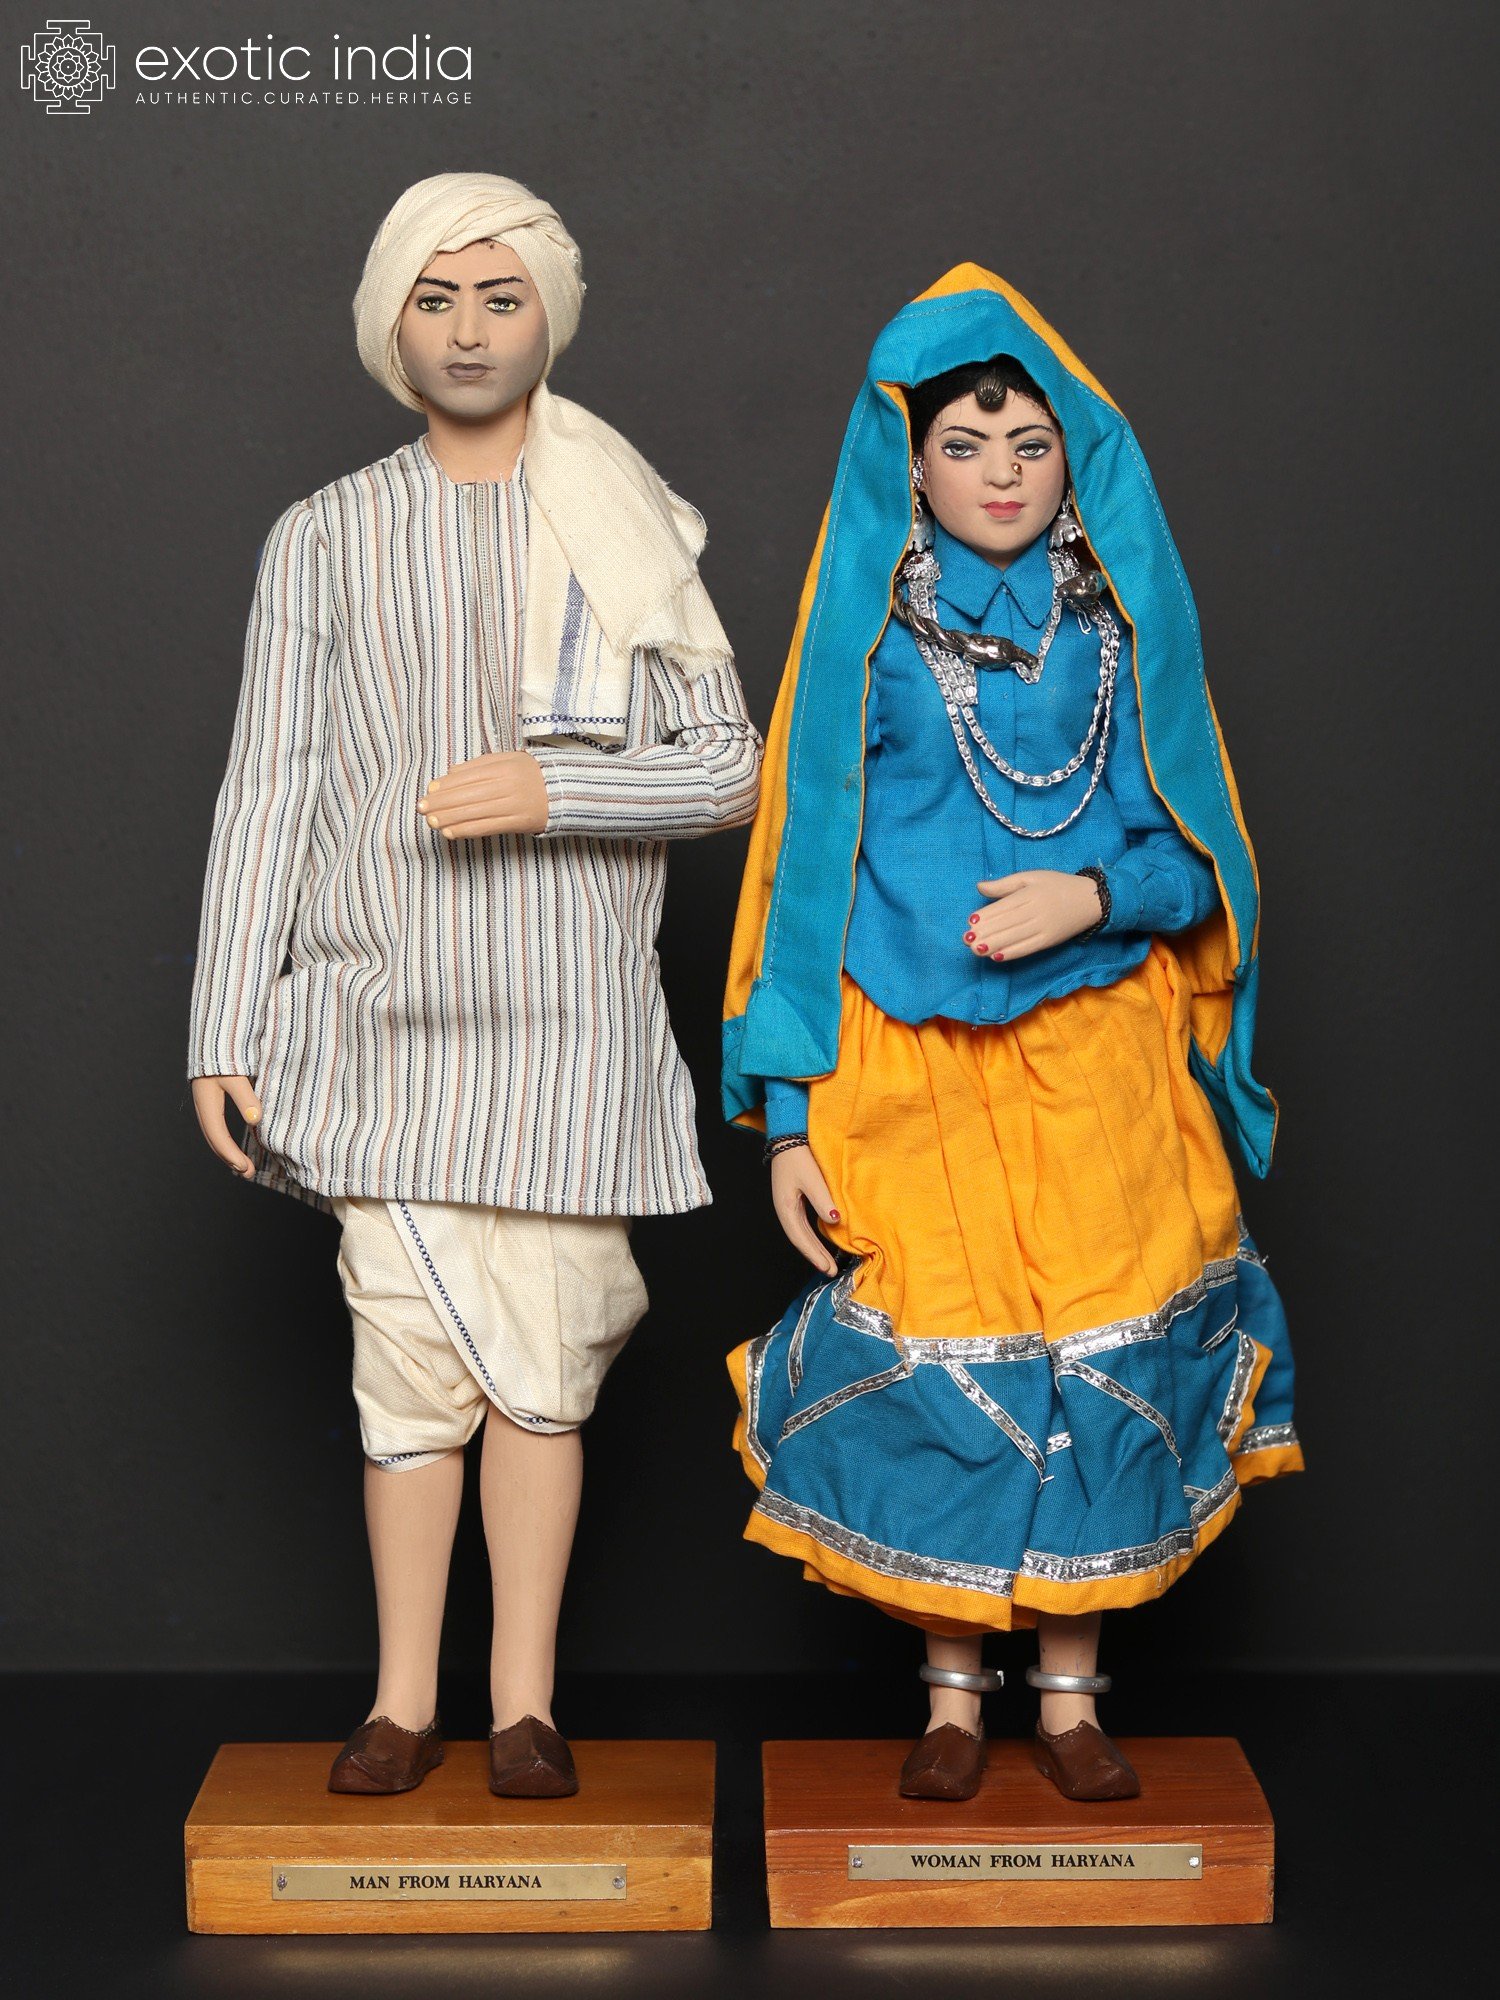 Punjabi ghagra suit - Wikipedia